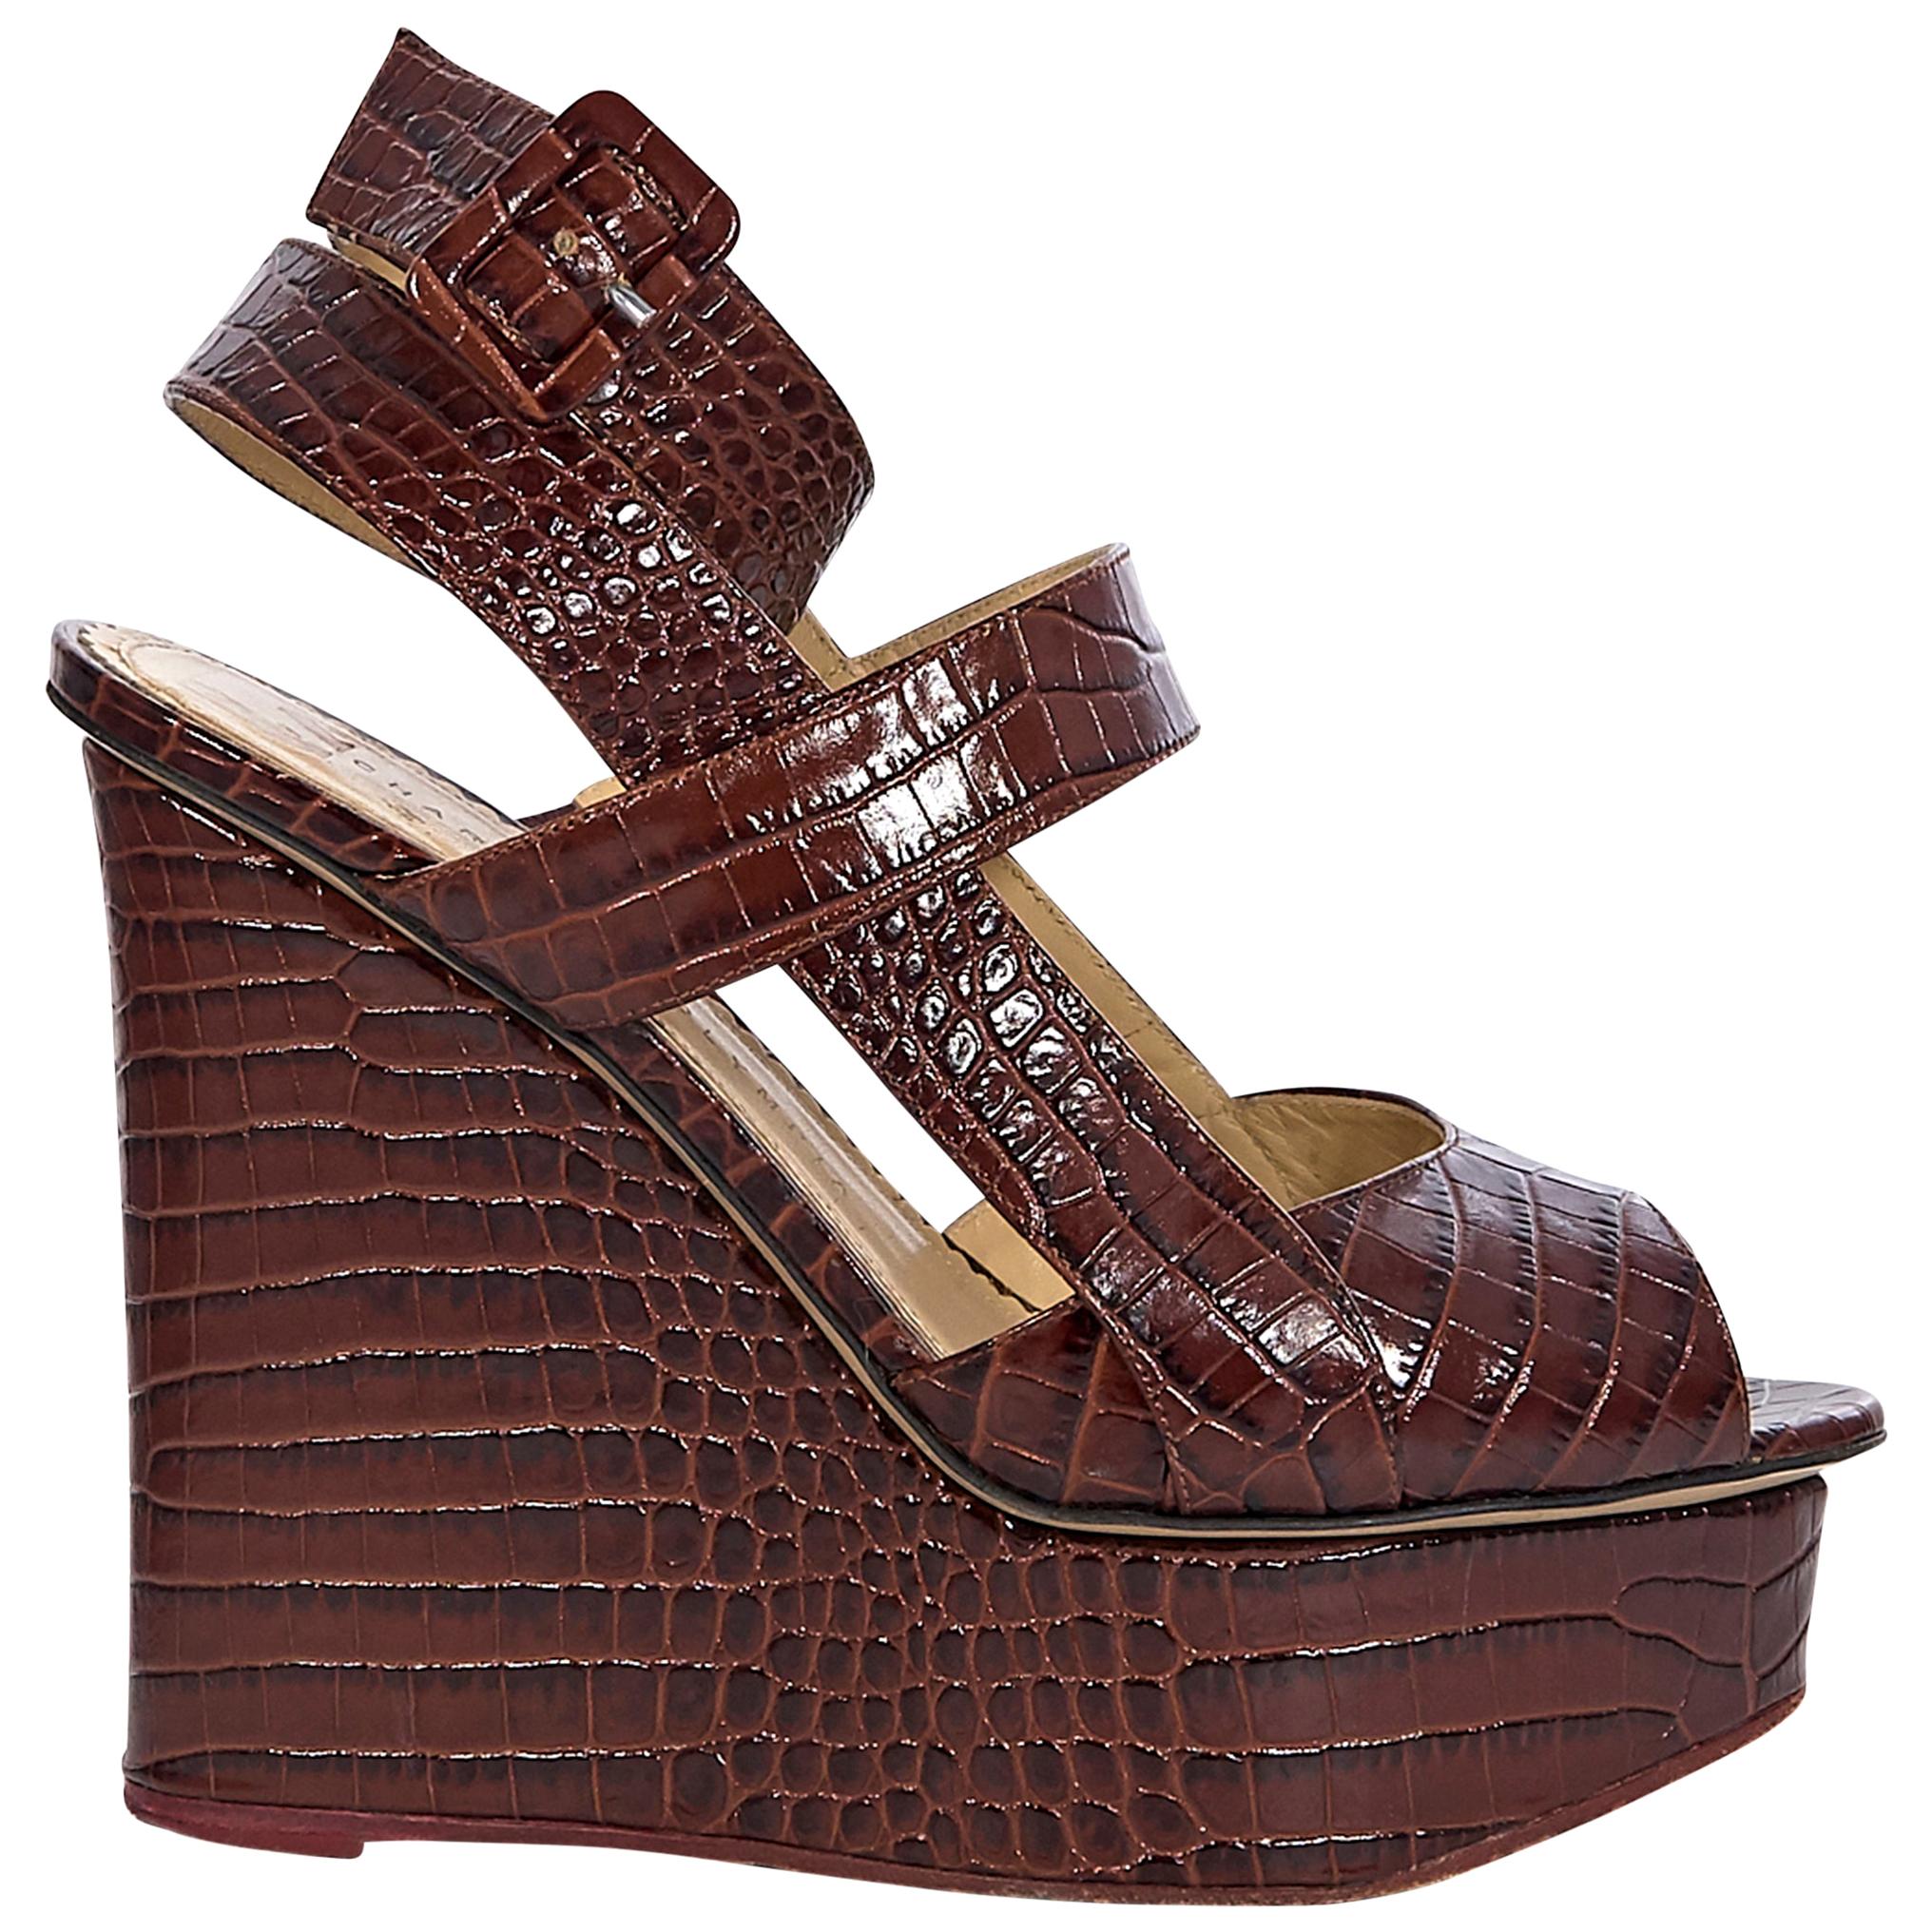 Charlotte Olympia Brown Leather Crocodile-Embossed Wedge Sandals